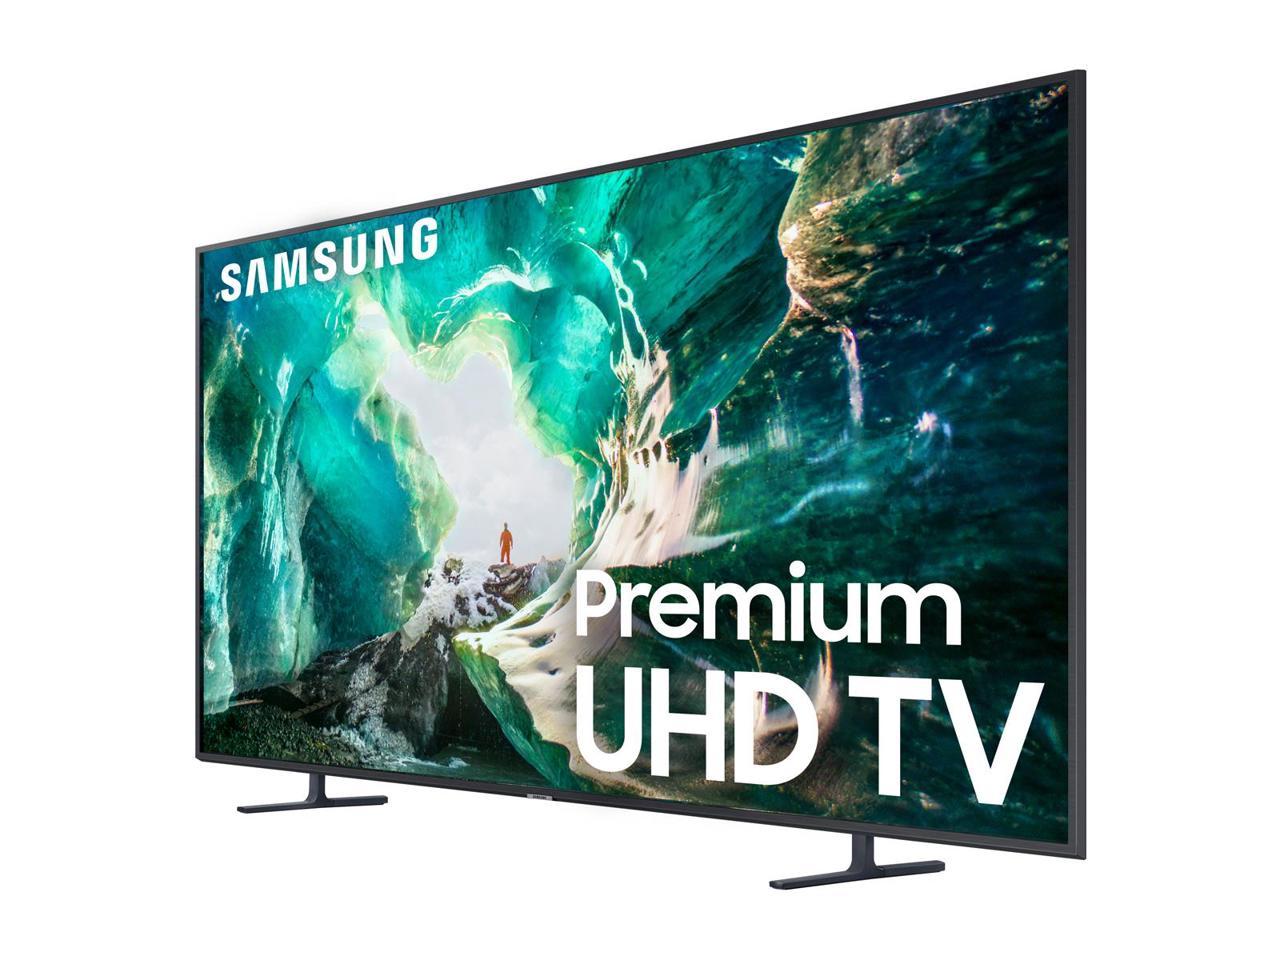 Samsung Ru8000 8 Series 55 Premium 4k Smart Uhd Led Tv Un55ru8000fxza 2019 8641